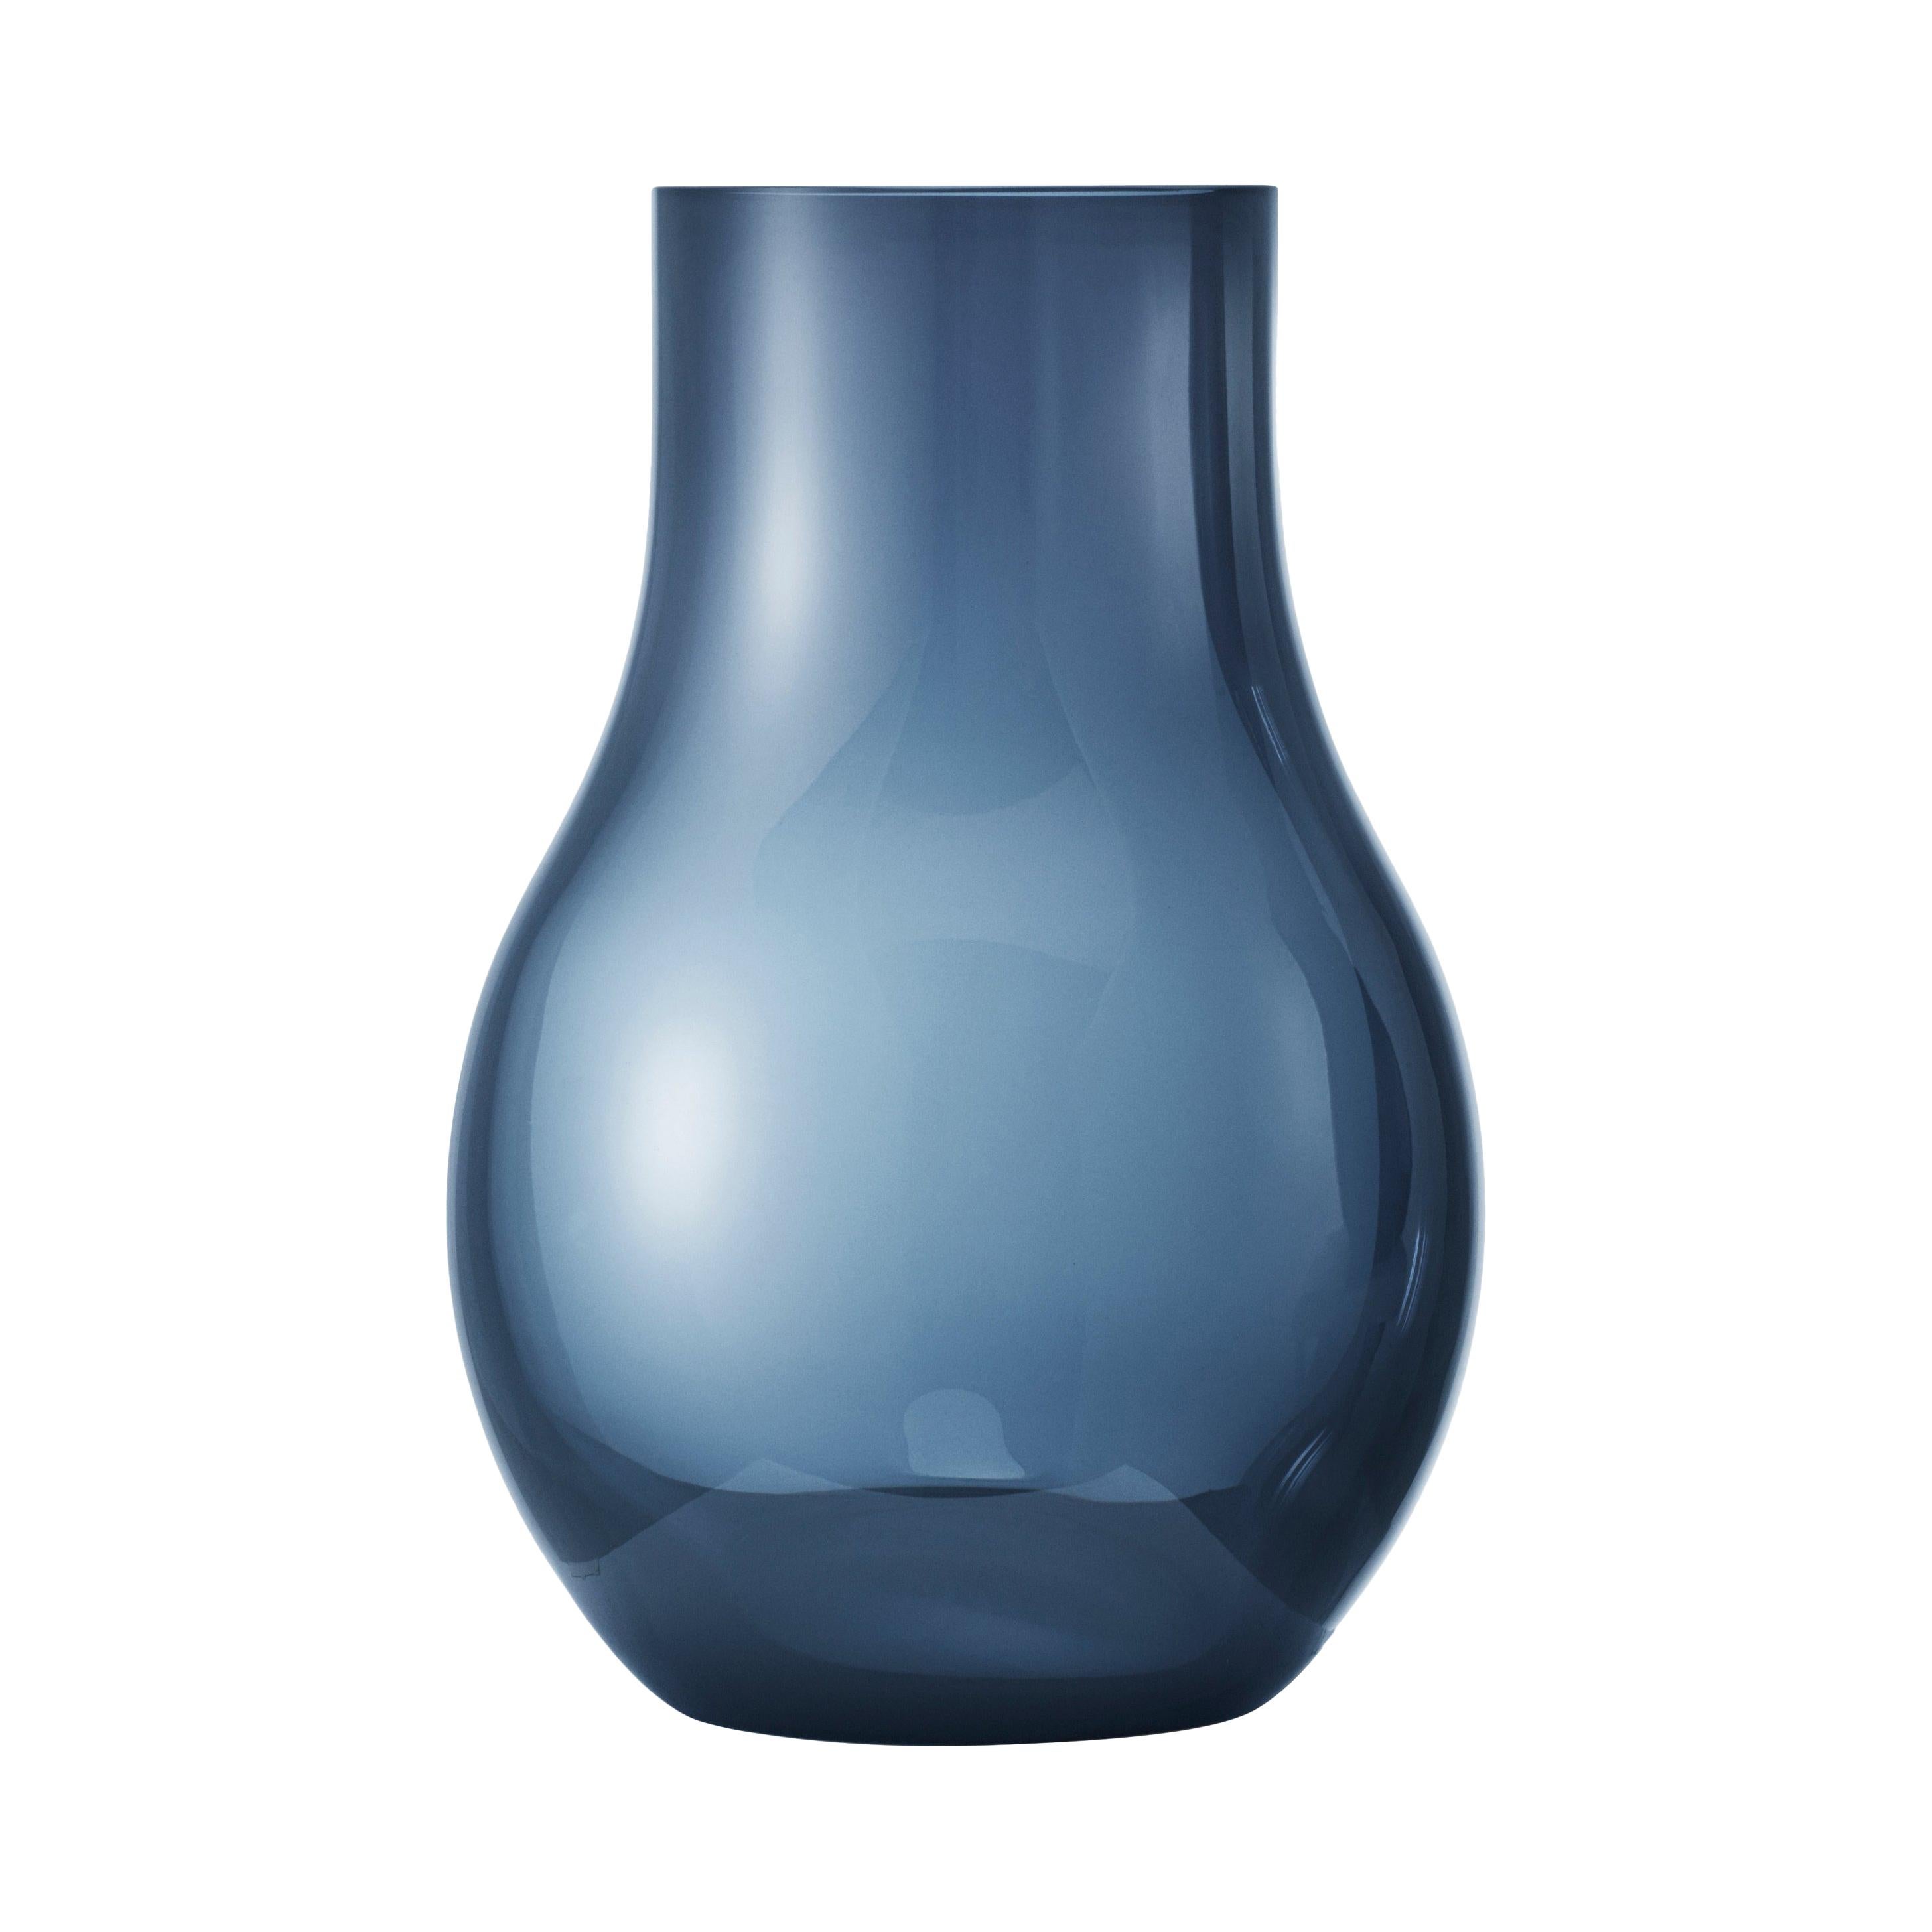 Georg Jensen Cafu Medium Vase in Blue Glass by Holmbäck Nordentoft For Sale